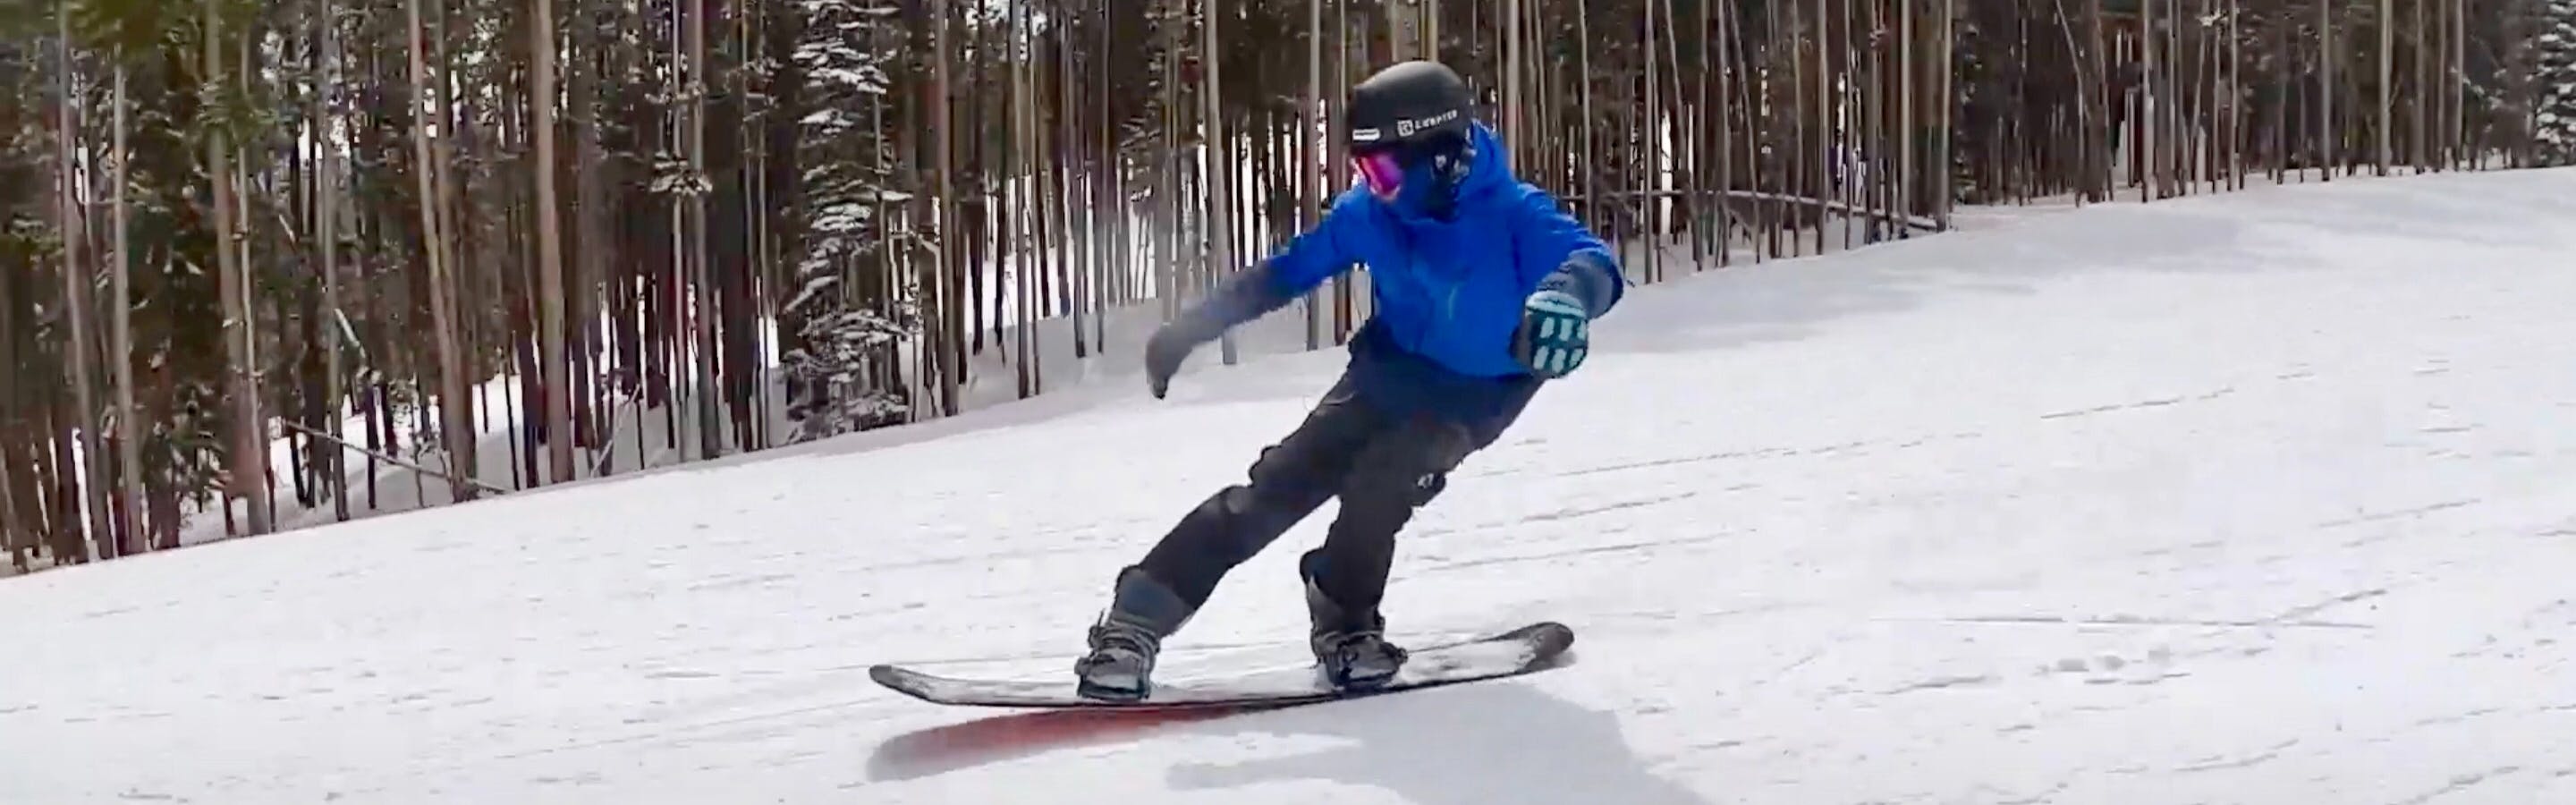 baan geur Pardon Expert Video Review: 2022 CAPiTA Black Snowboard of Death | Curated.com